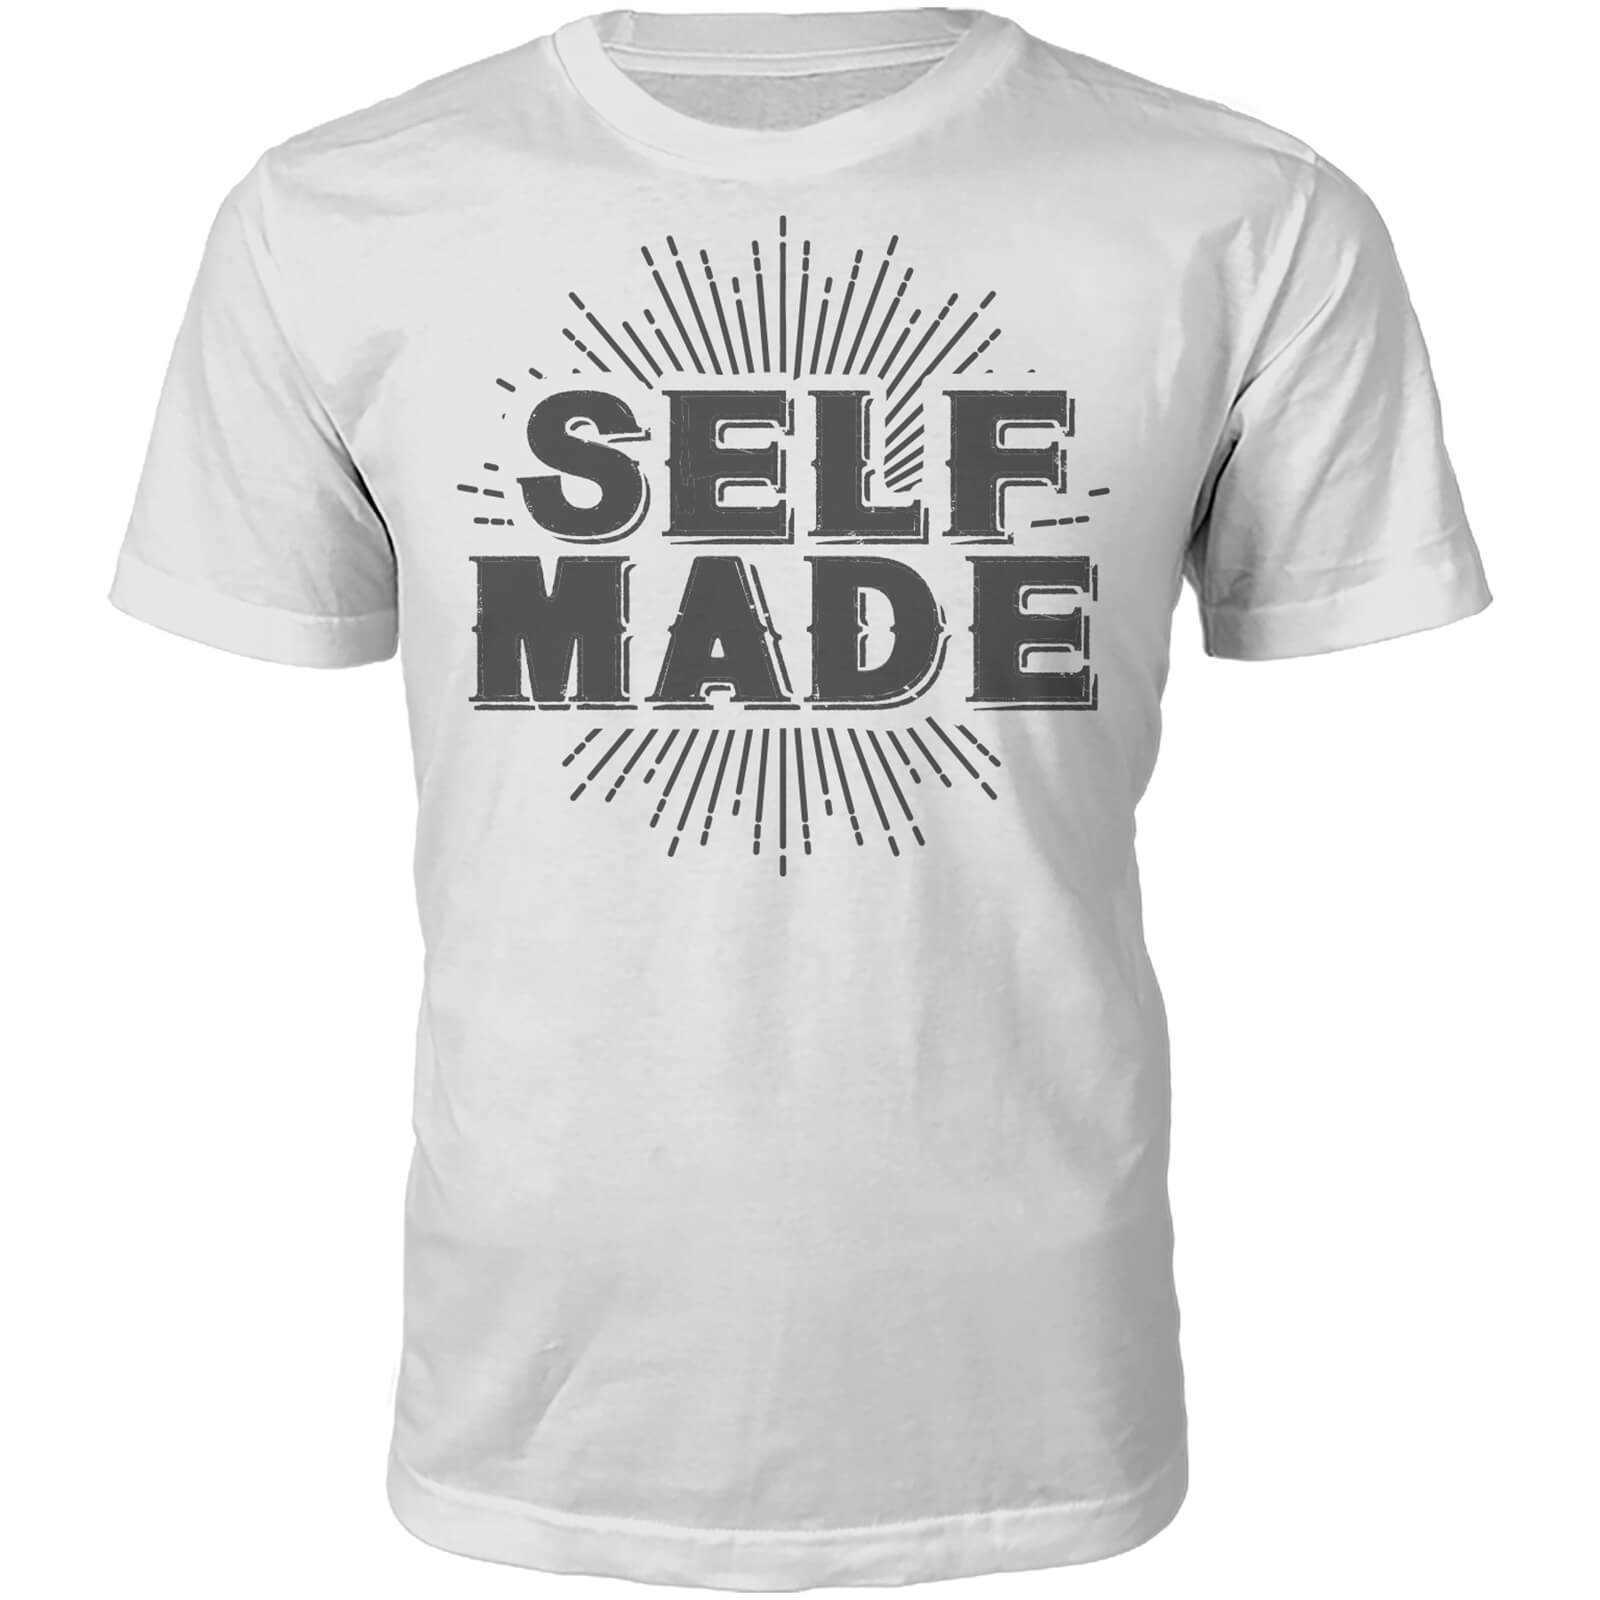 Одежда selfmade. Self made футболка мужская. Бренд на одежде selfmade. Футболка Fashion of Original self made. Hasbulla футболка.